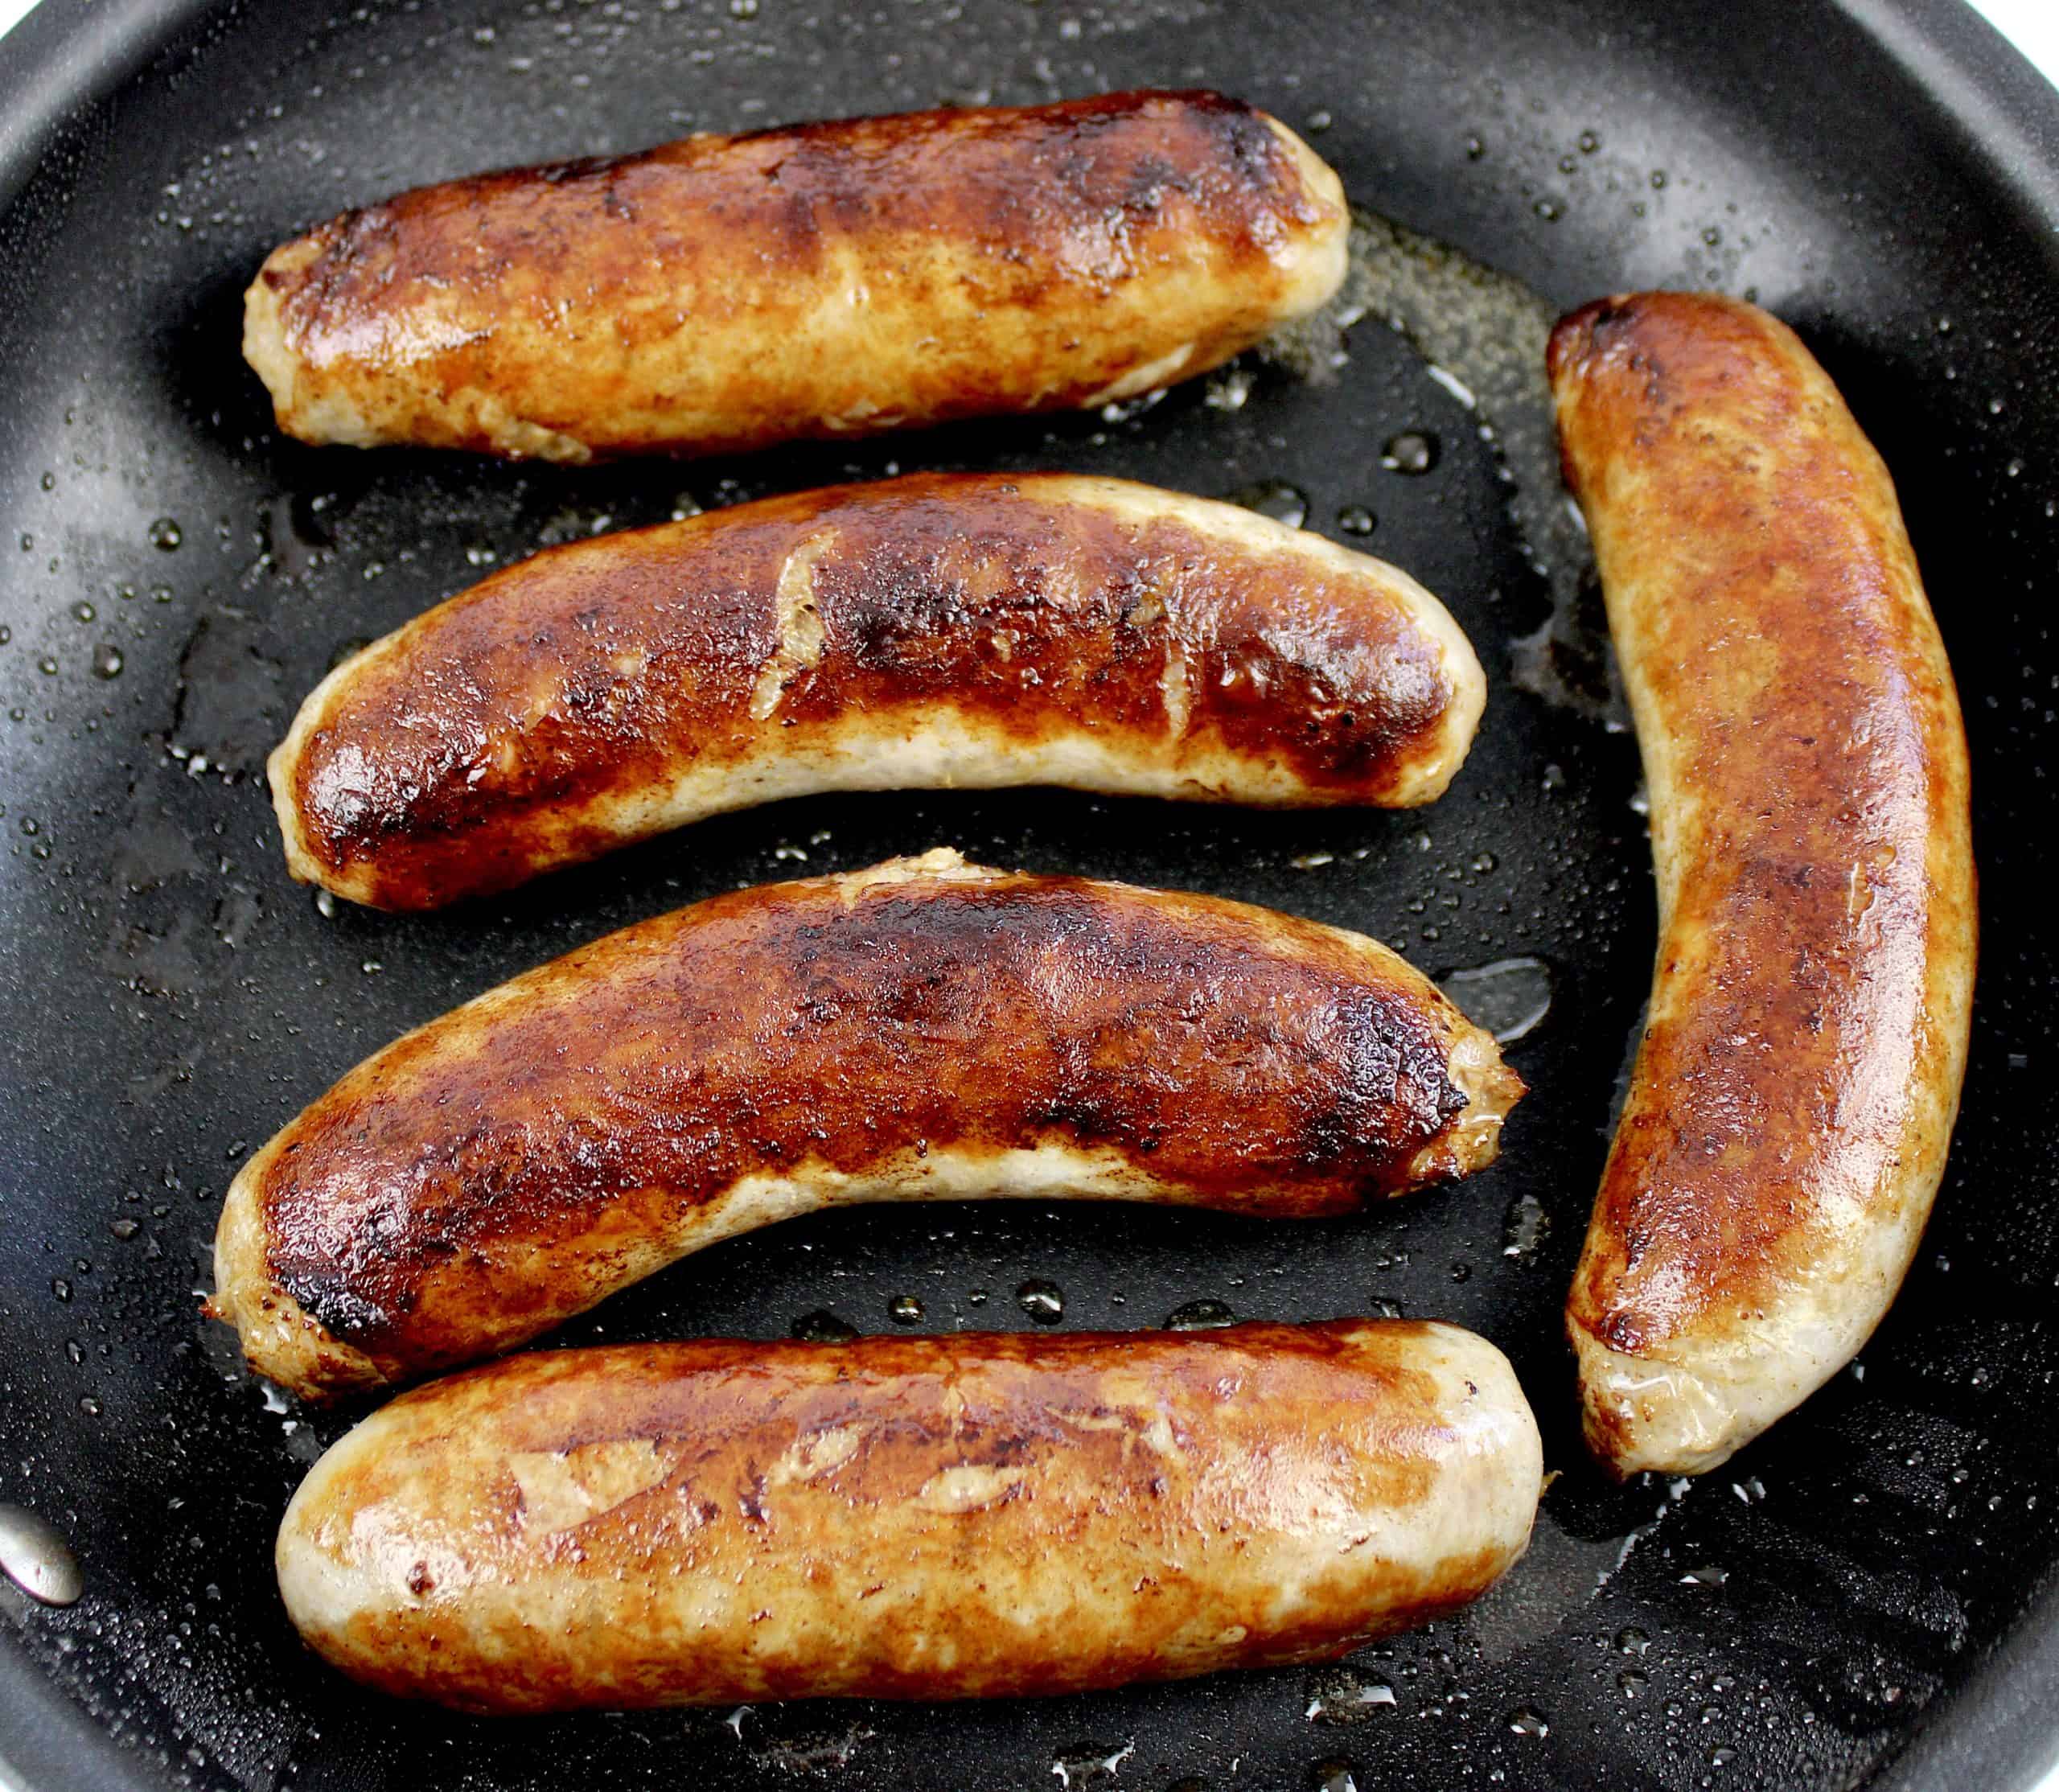 5 sausage links in frying pan browned